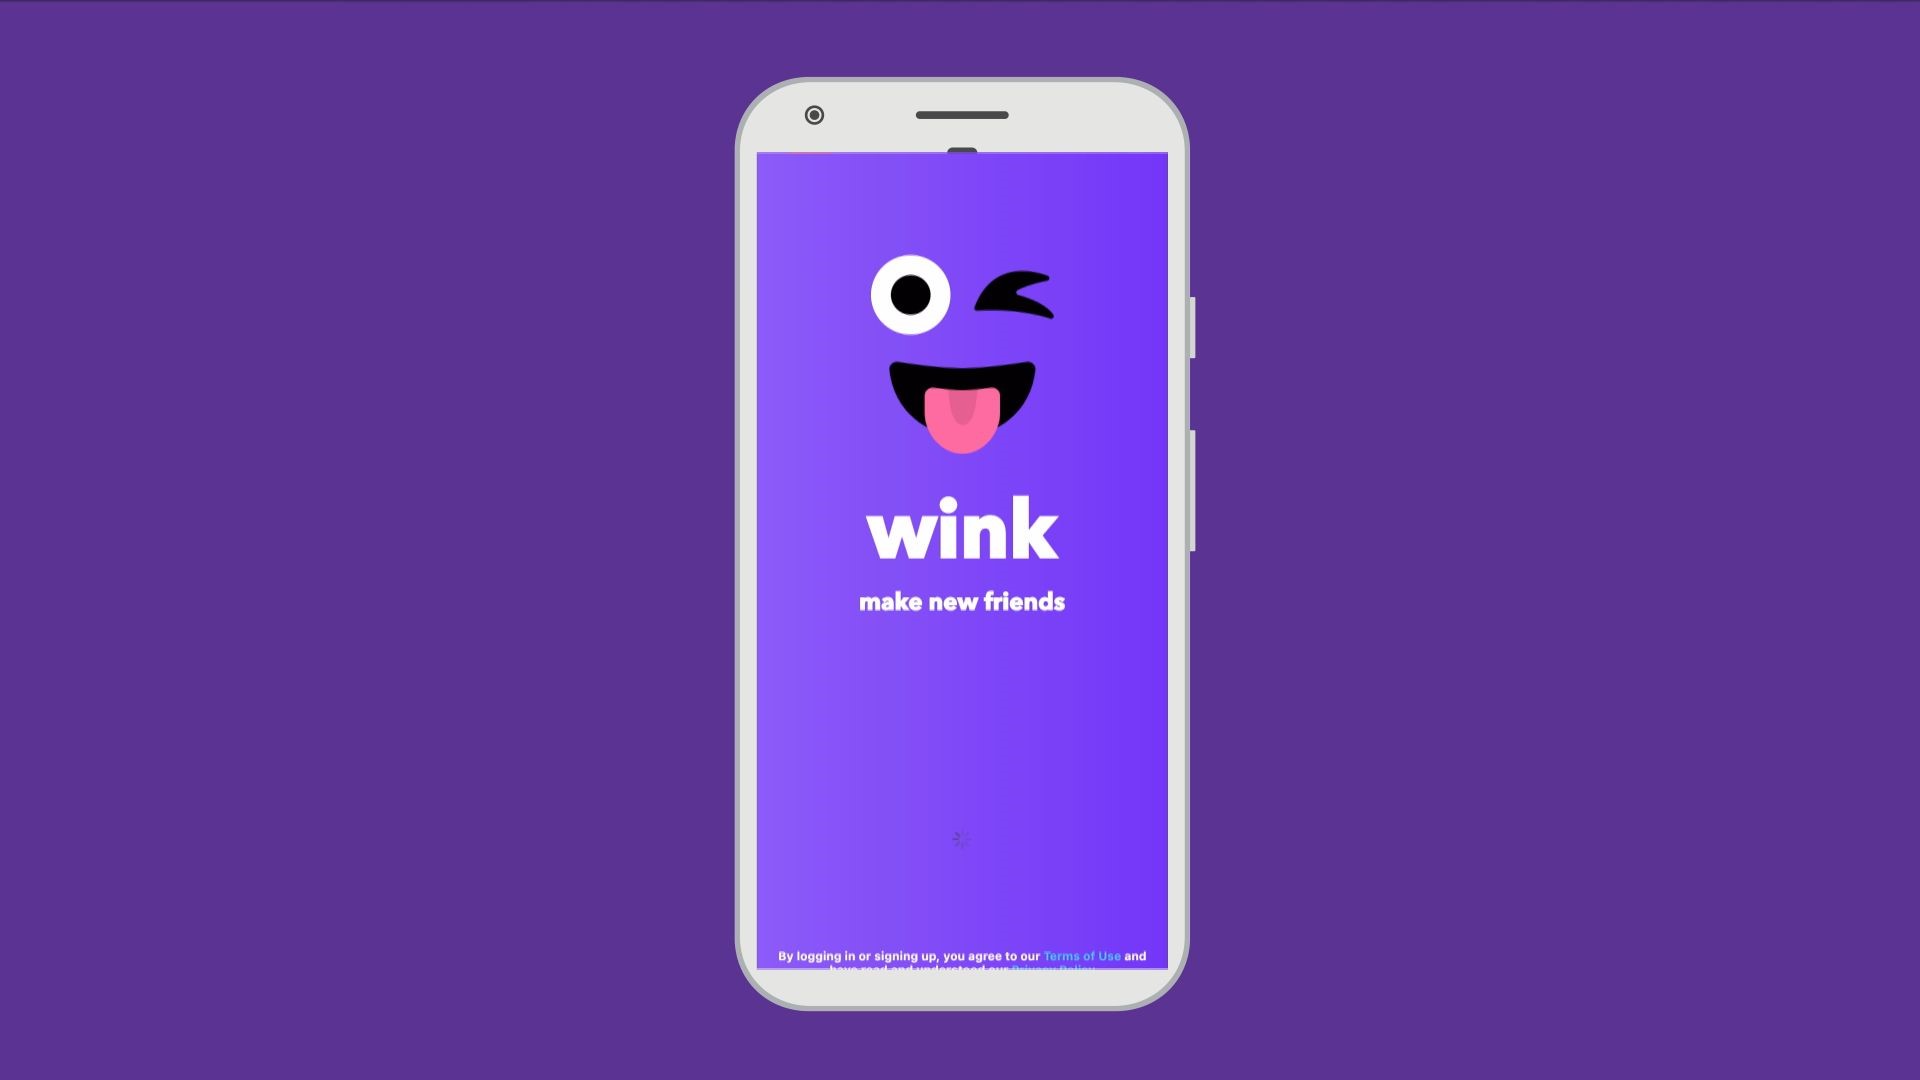 Wink app nudes